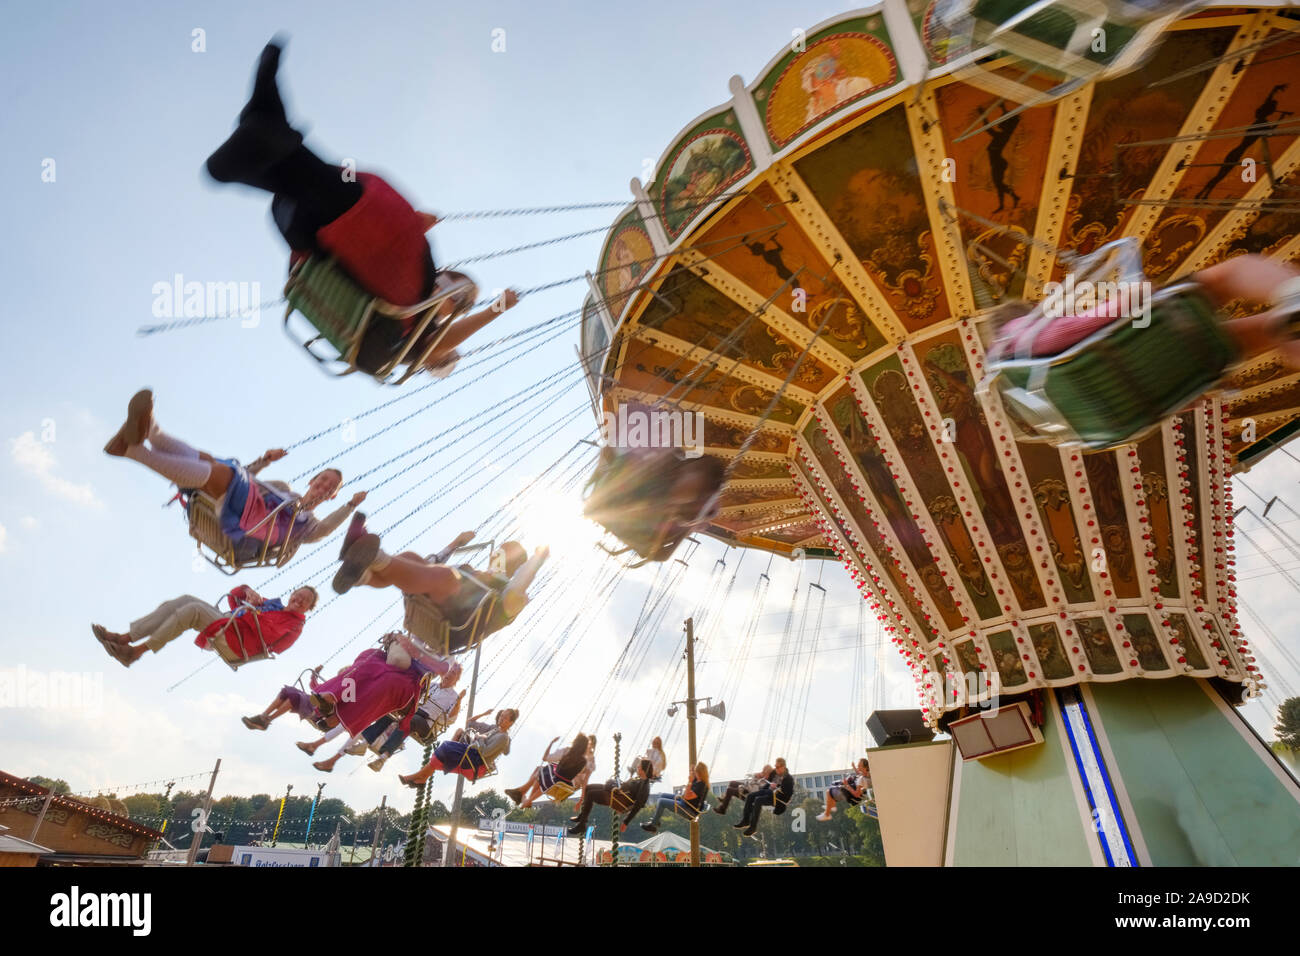 Catena carousel, catena plane calf, Oide Wiesn, Oktoberfest, Munich, Upper Bavaria, Bavarians, Germany Stock Photo